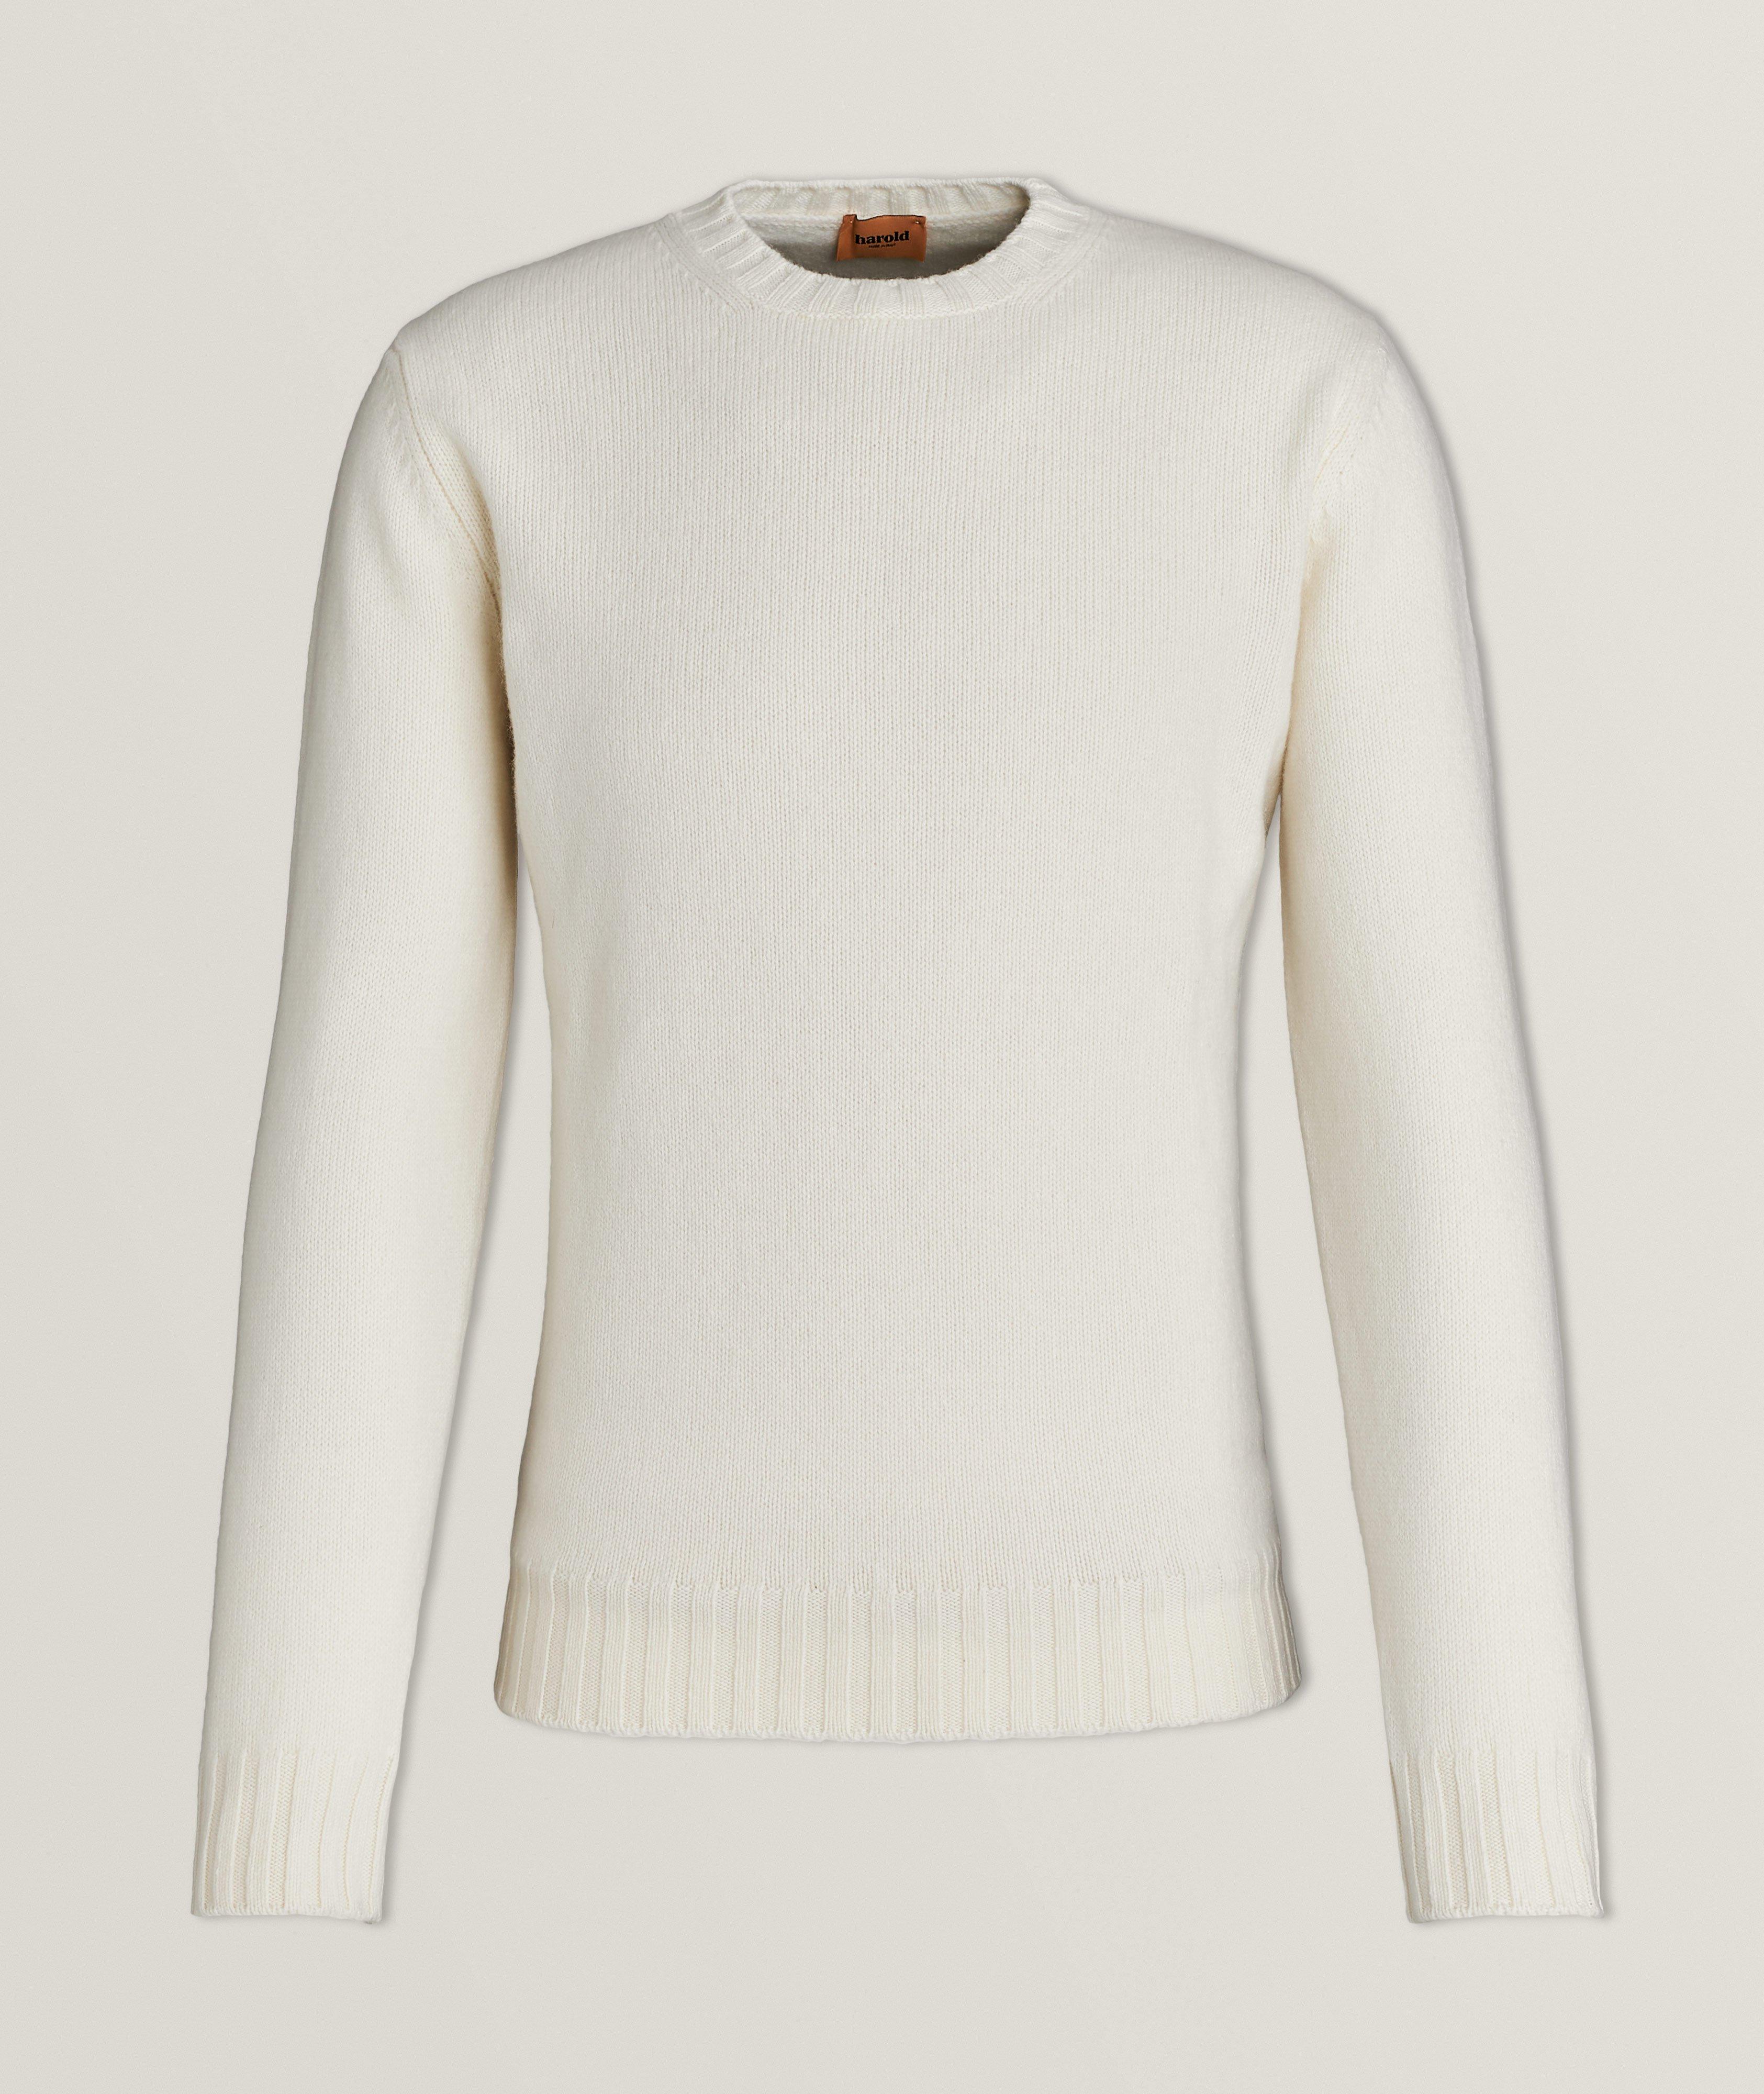 Extra-Fine Gauge Merino Wool Sweater image 0